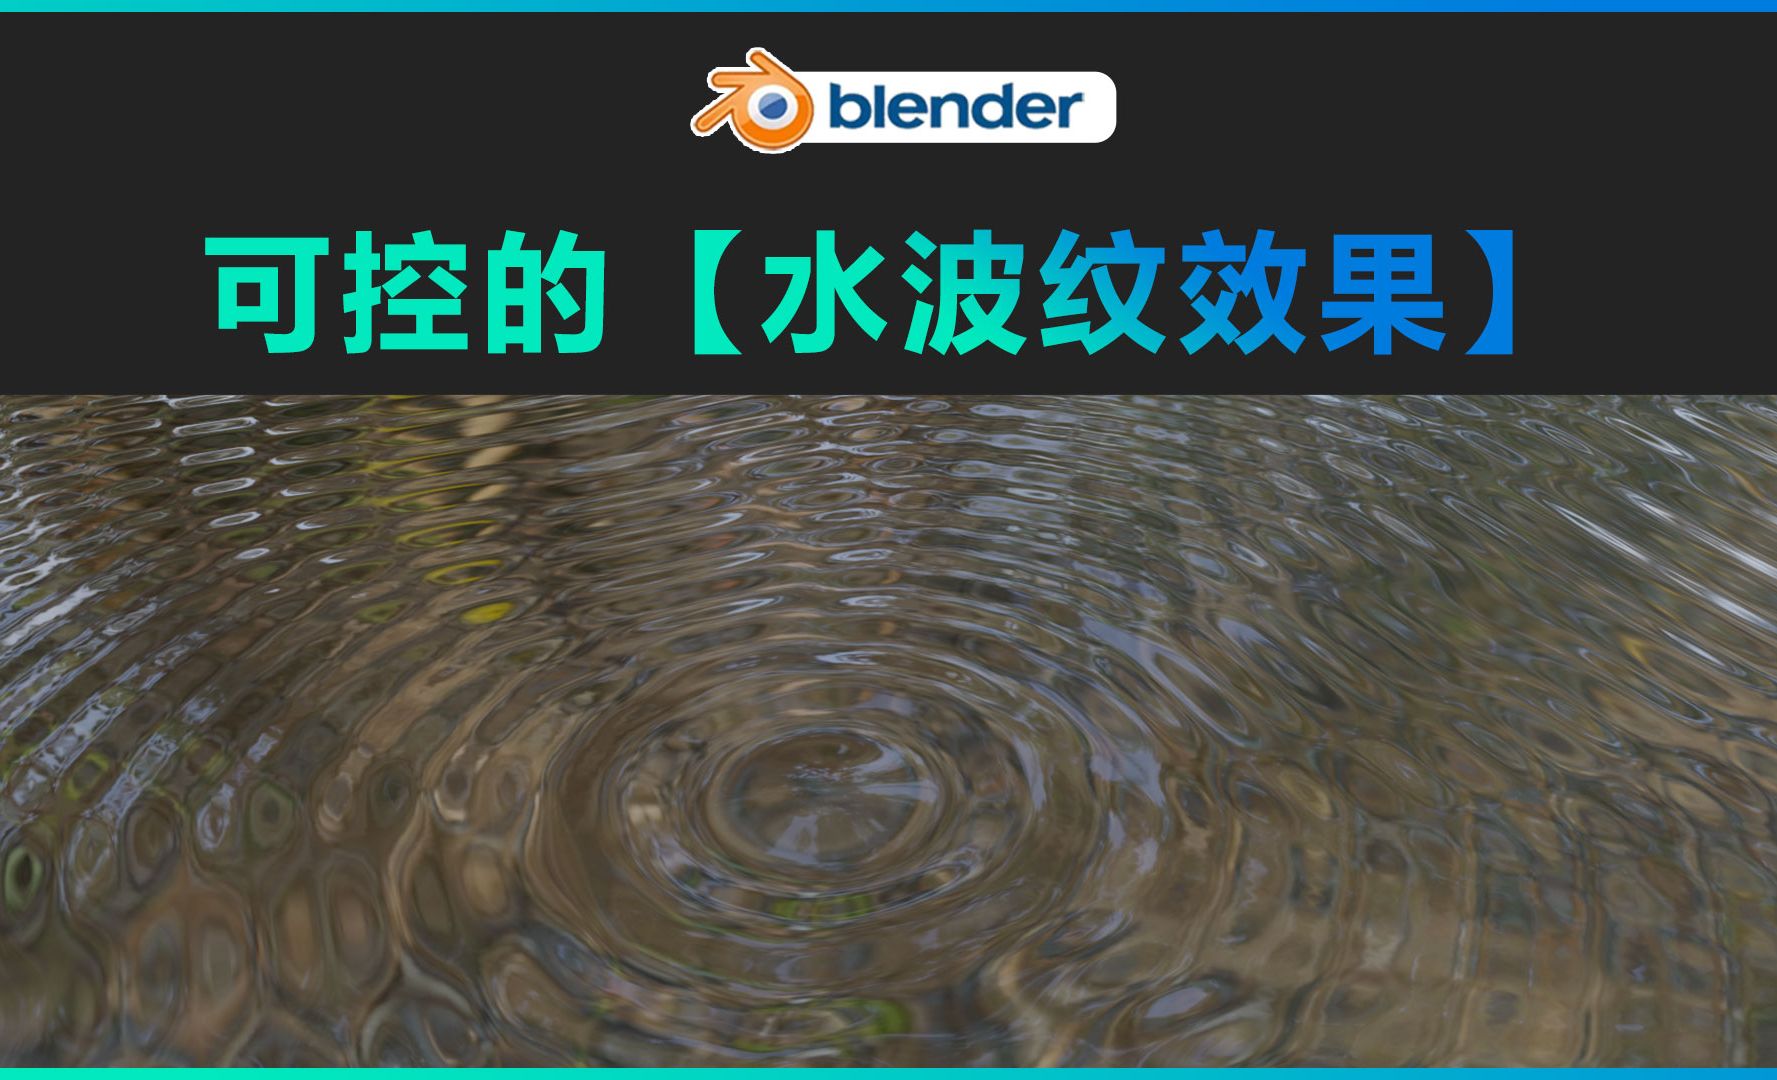 Blender-可控的【水波纹效果】